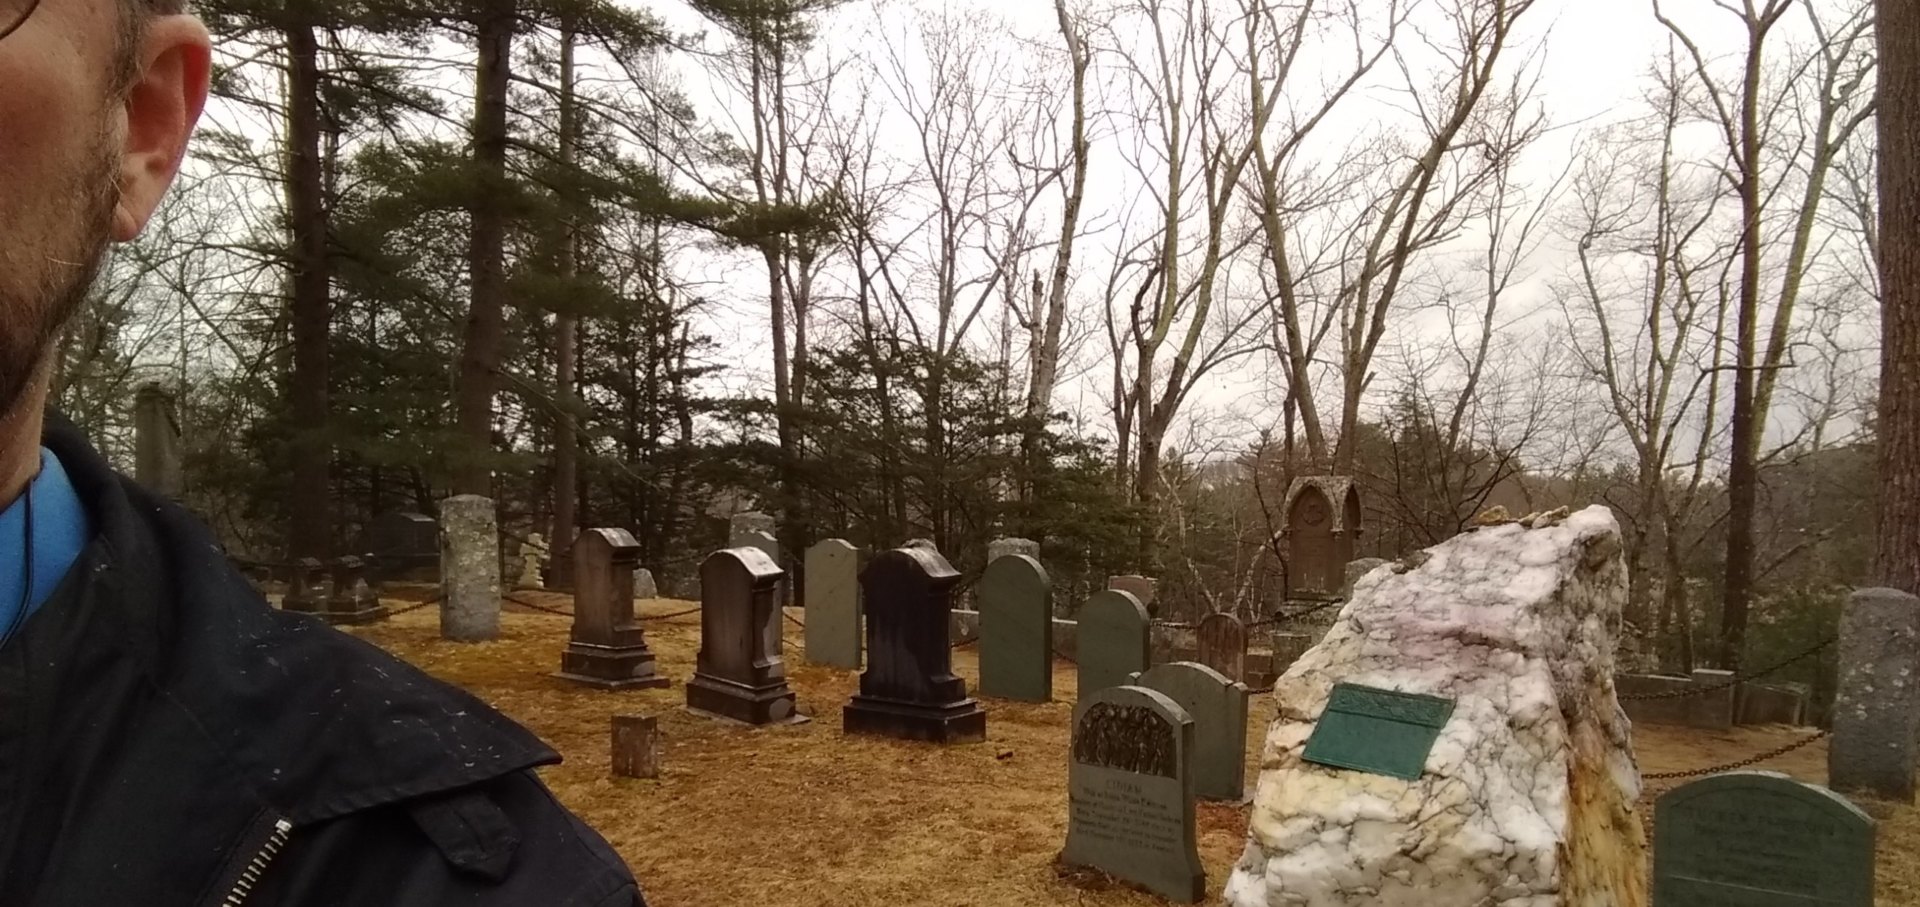 Sleepy Hollow Cemetery, Concord, Massachusetts